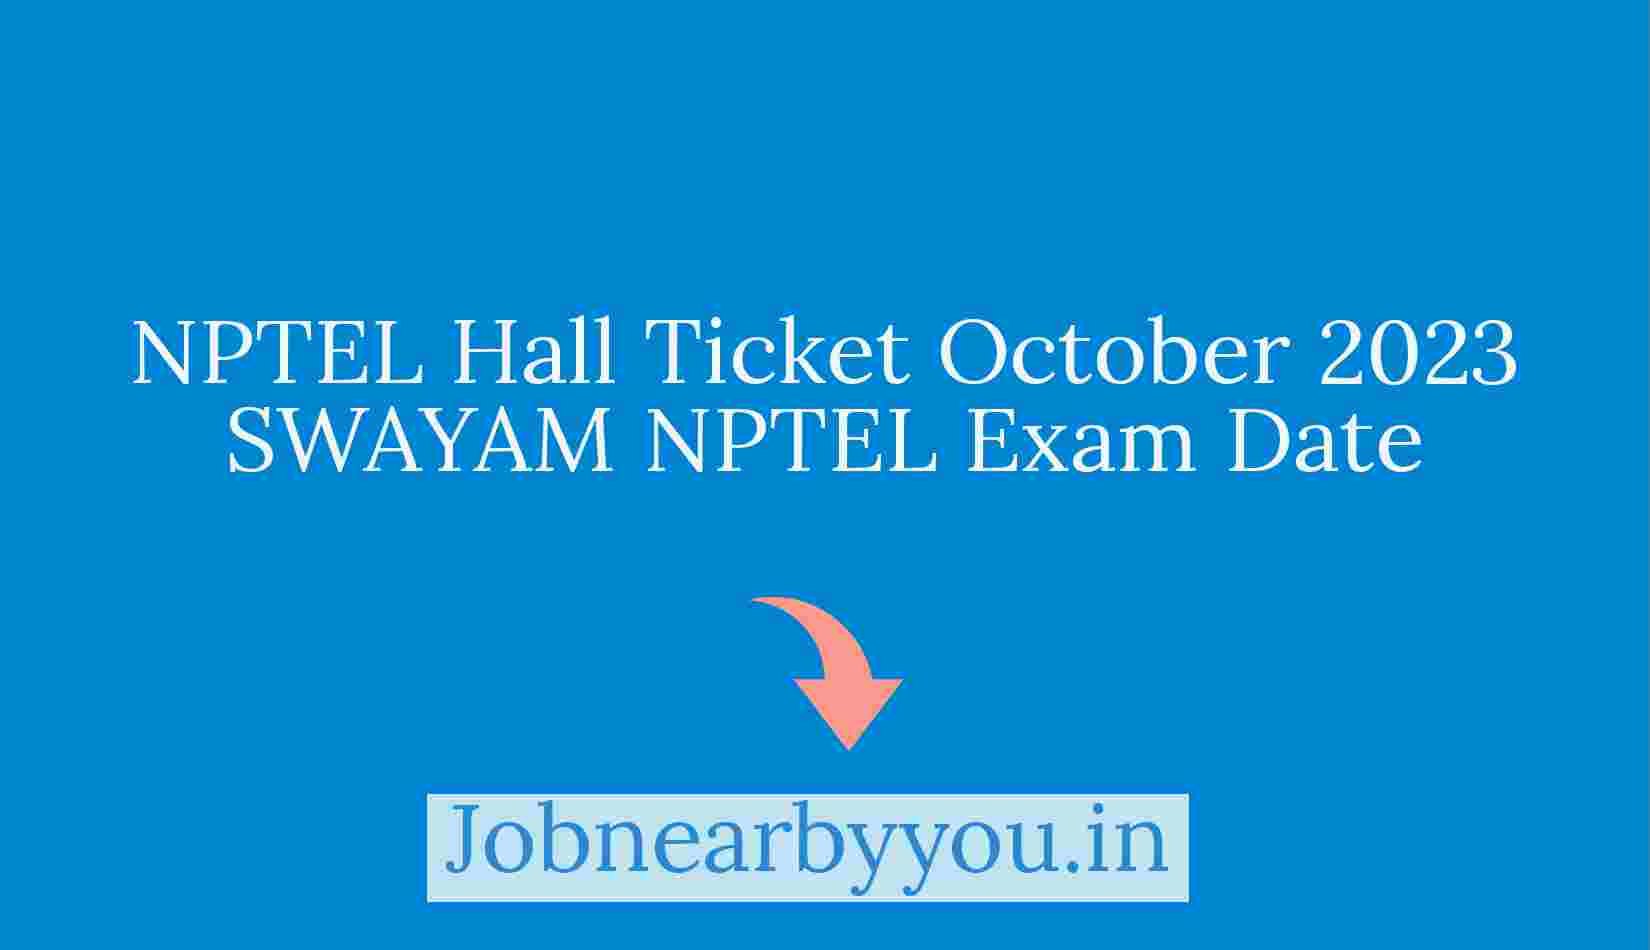 NPTEL Hall Ticket October 2023 SWAYAM NPTEL Exam Date